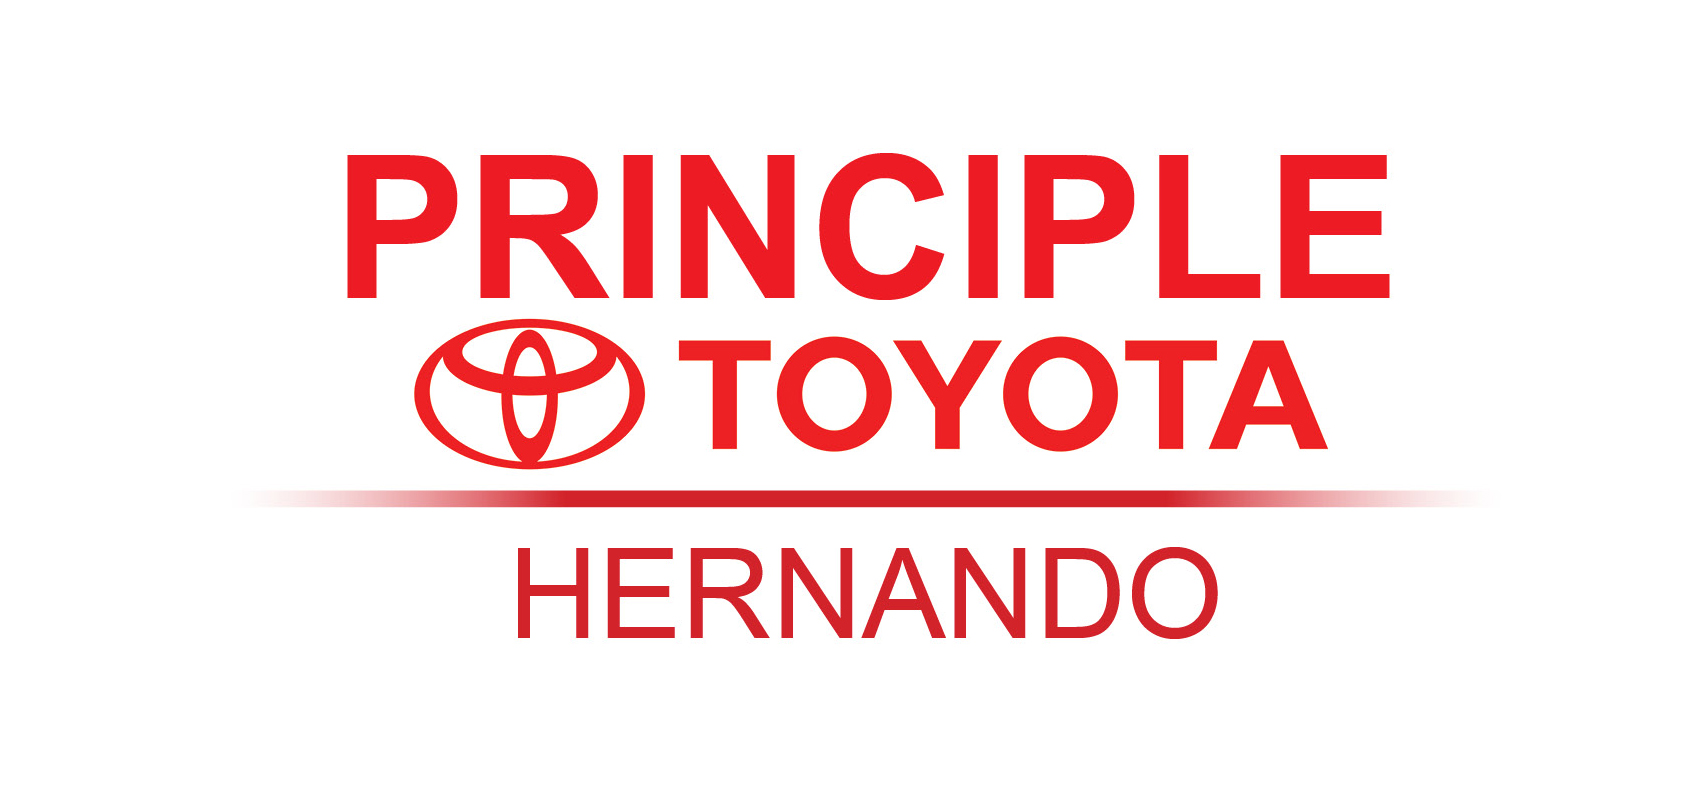 Principle Toyota Hernando Logo (1)